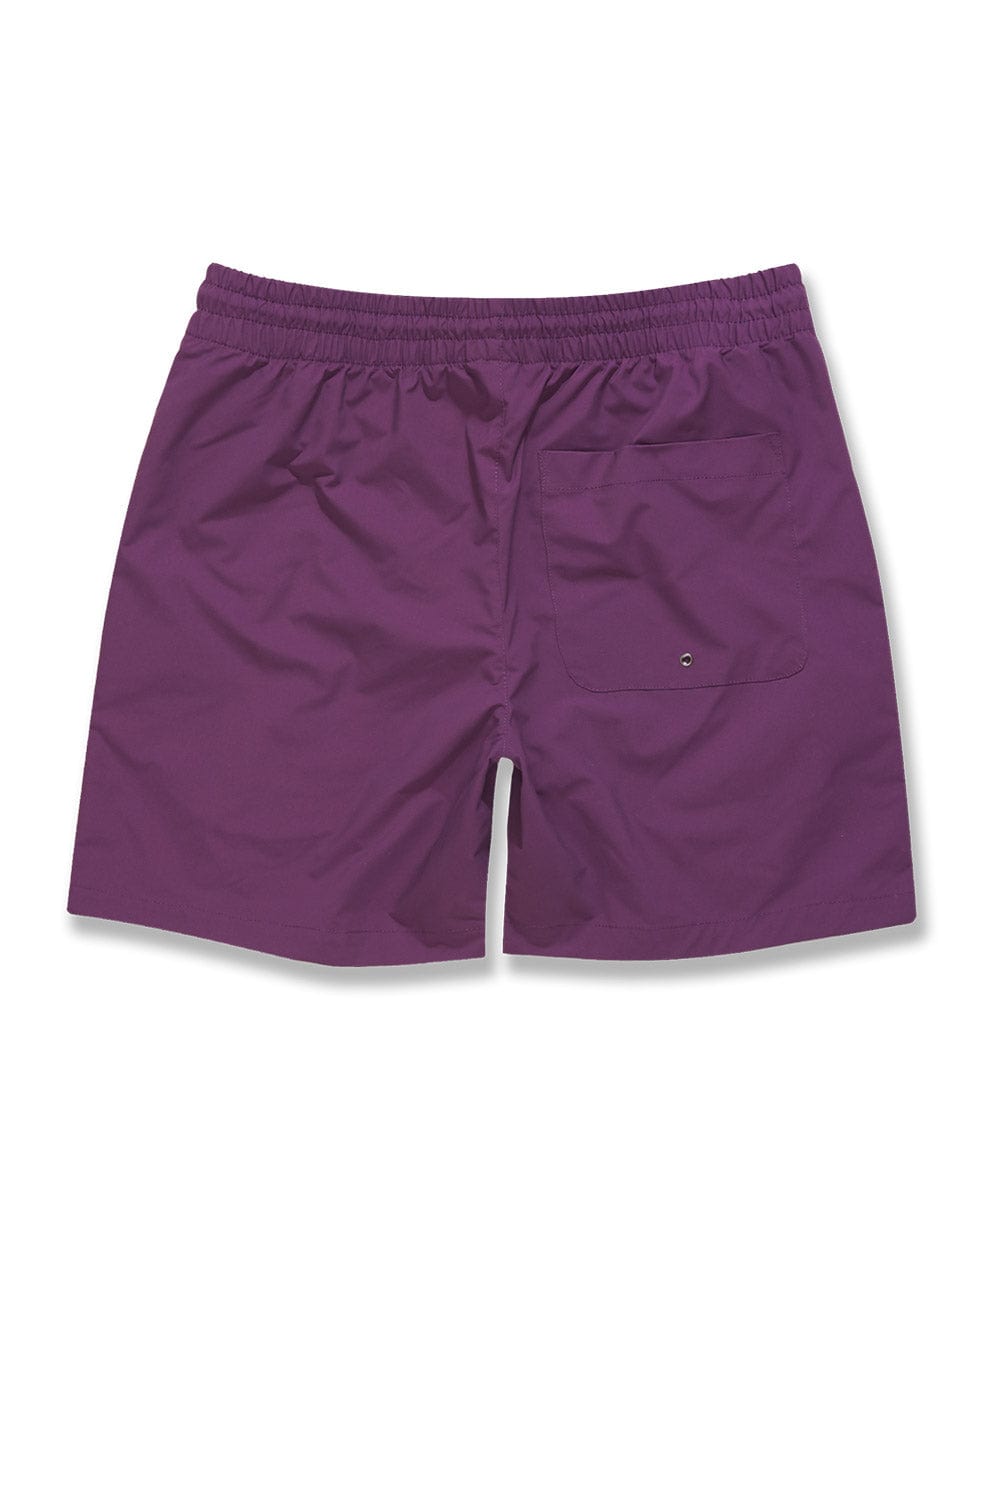 Jordan Craig Athletic - SYIP Shorts (Cool Berry)